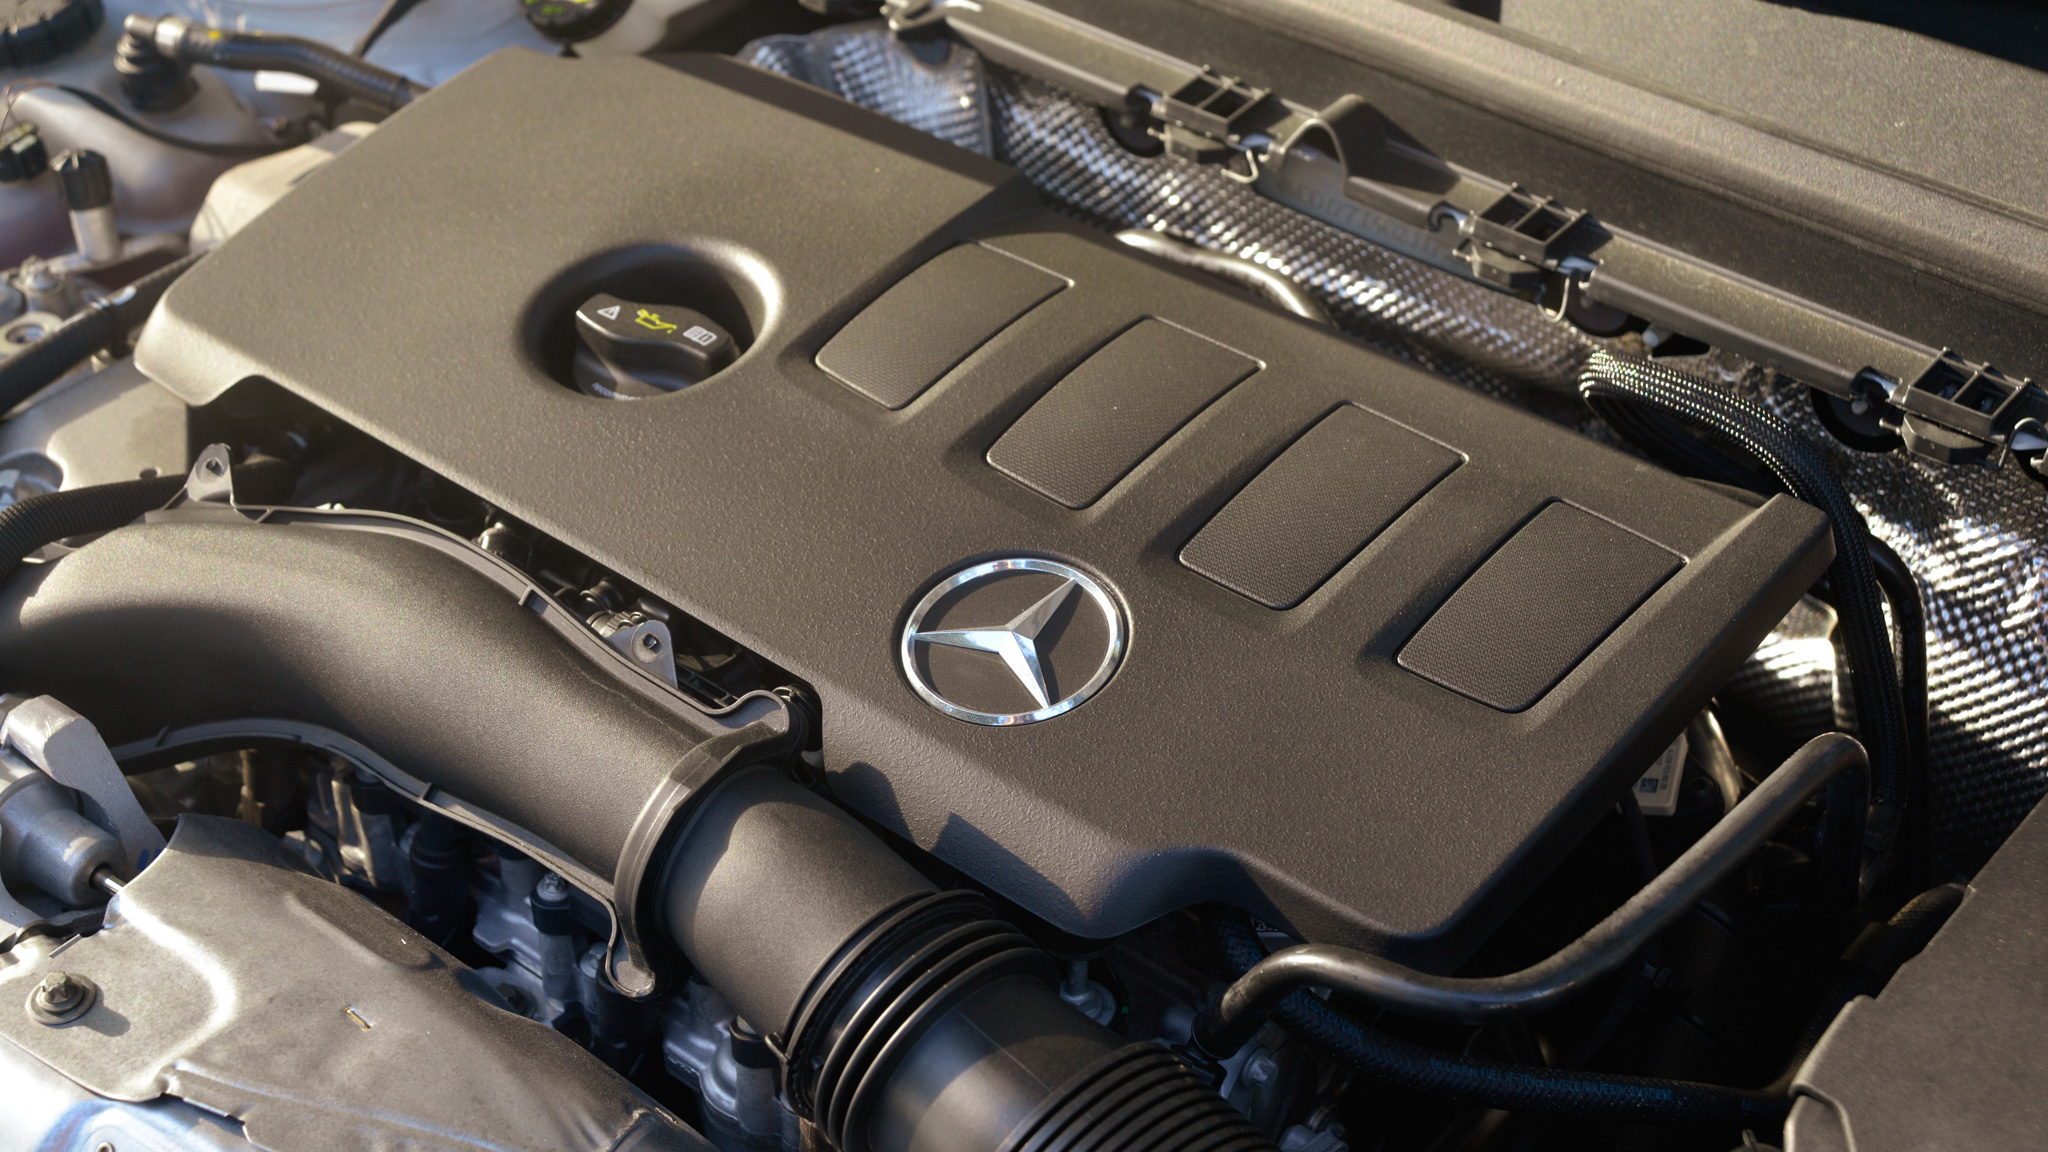 2021 Mercedes-Benz A250 Sedan CBU engine